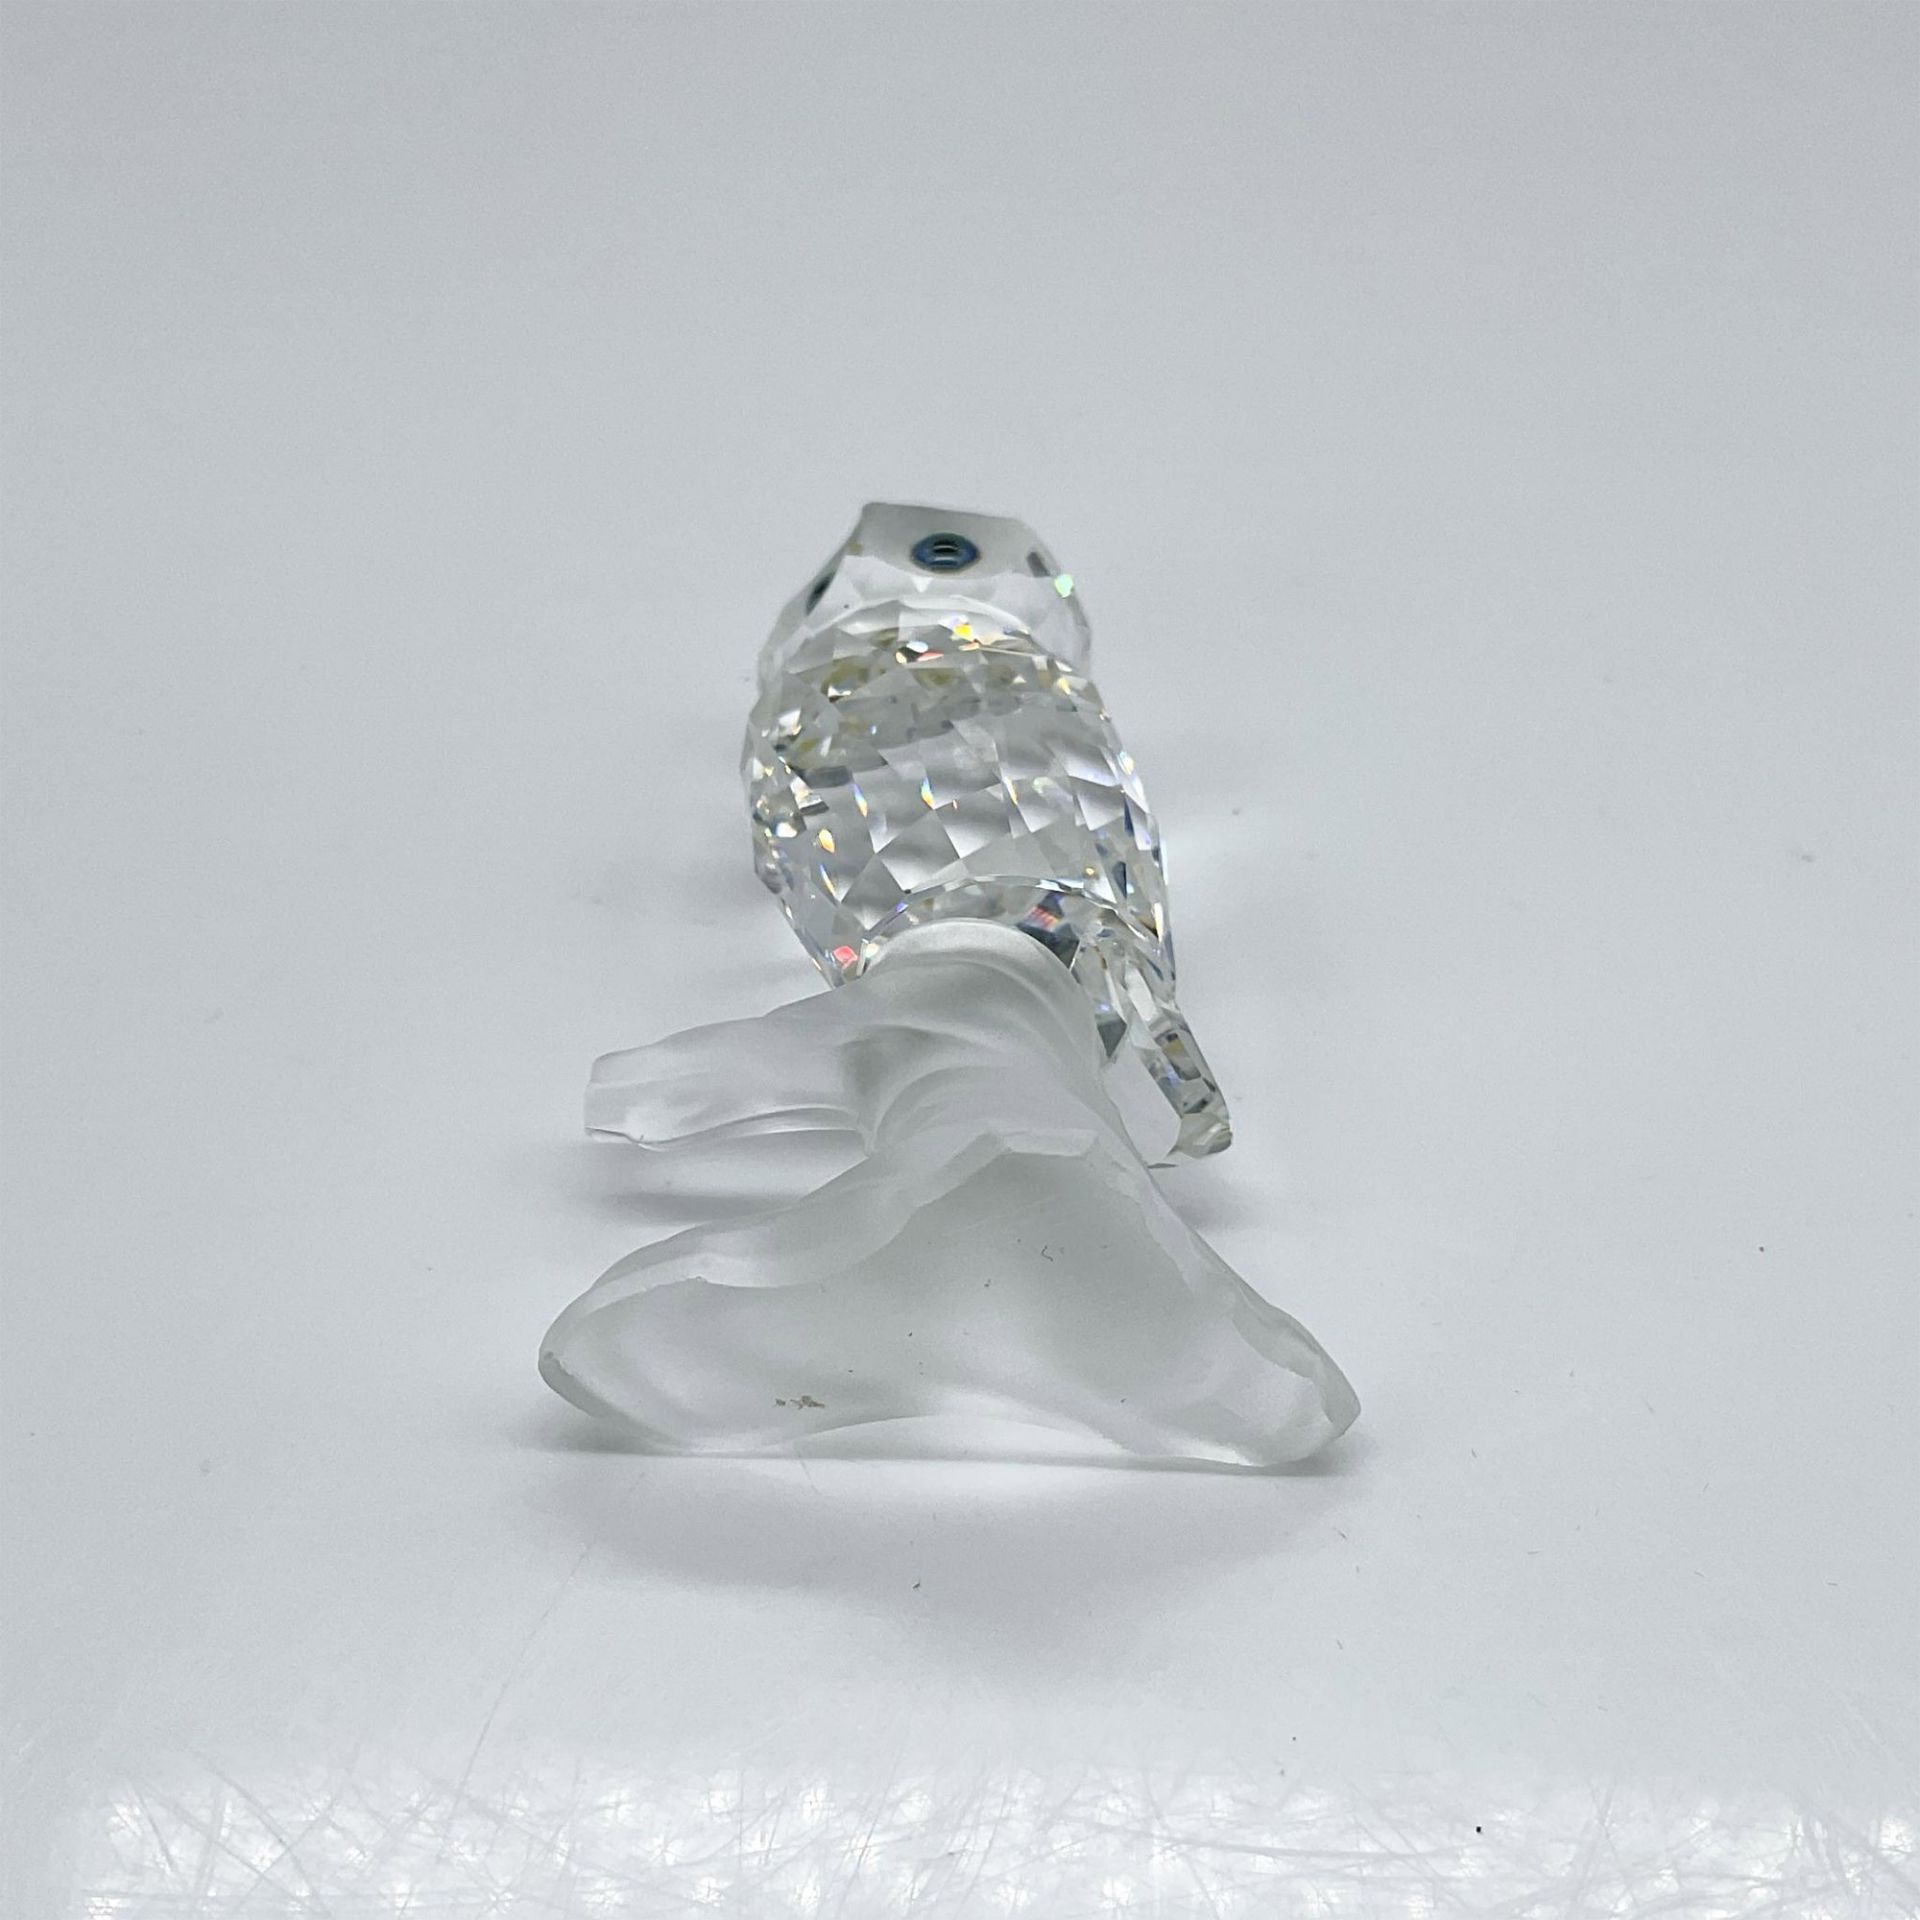 Swarovski Crystal Figurine, Owl on Branch - Image 4 of 5